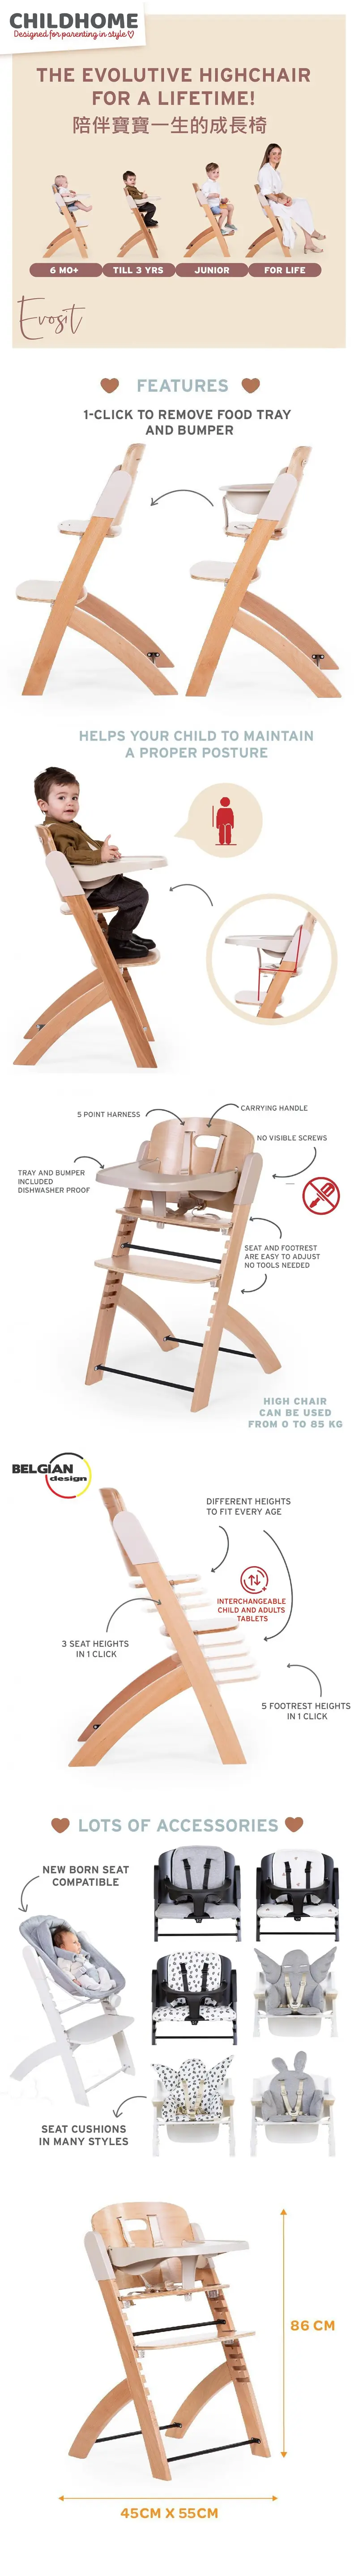 Childhome Evosit 可調式高腳餐椅連餐盤